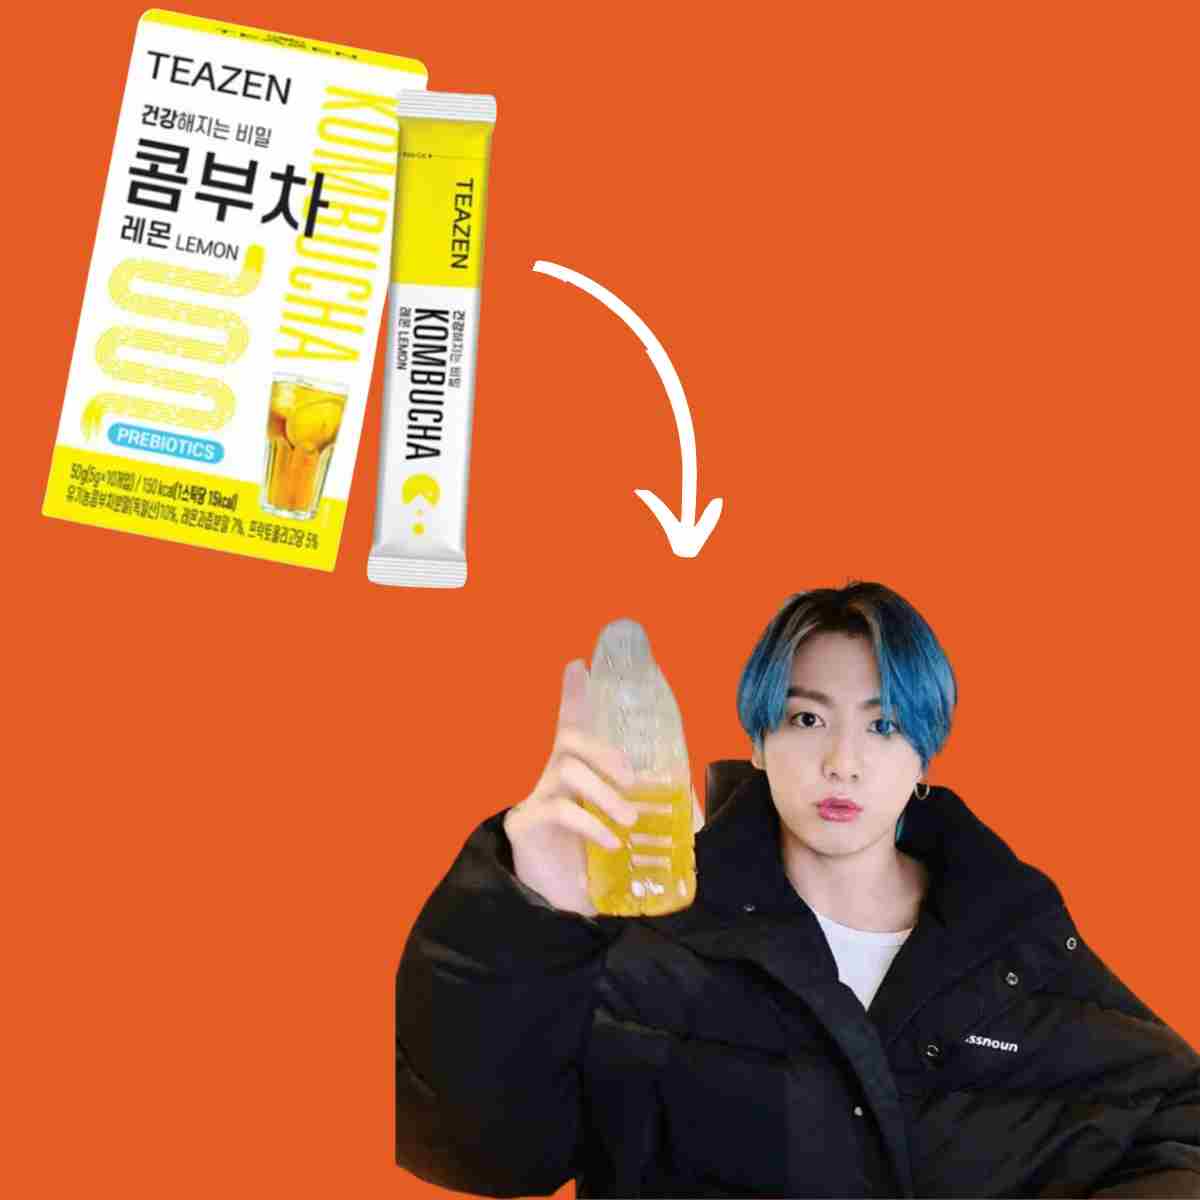 BTS jungkook drinking teazen kombucha powder